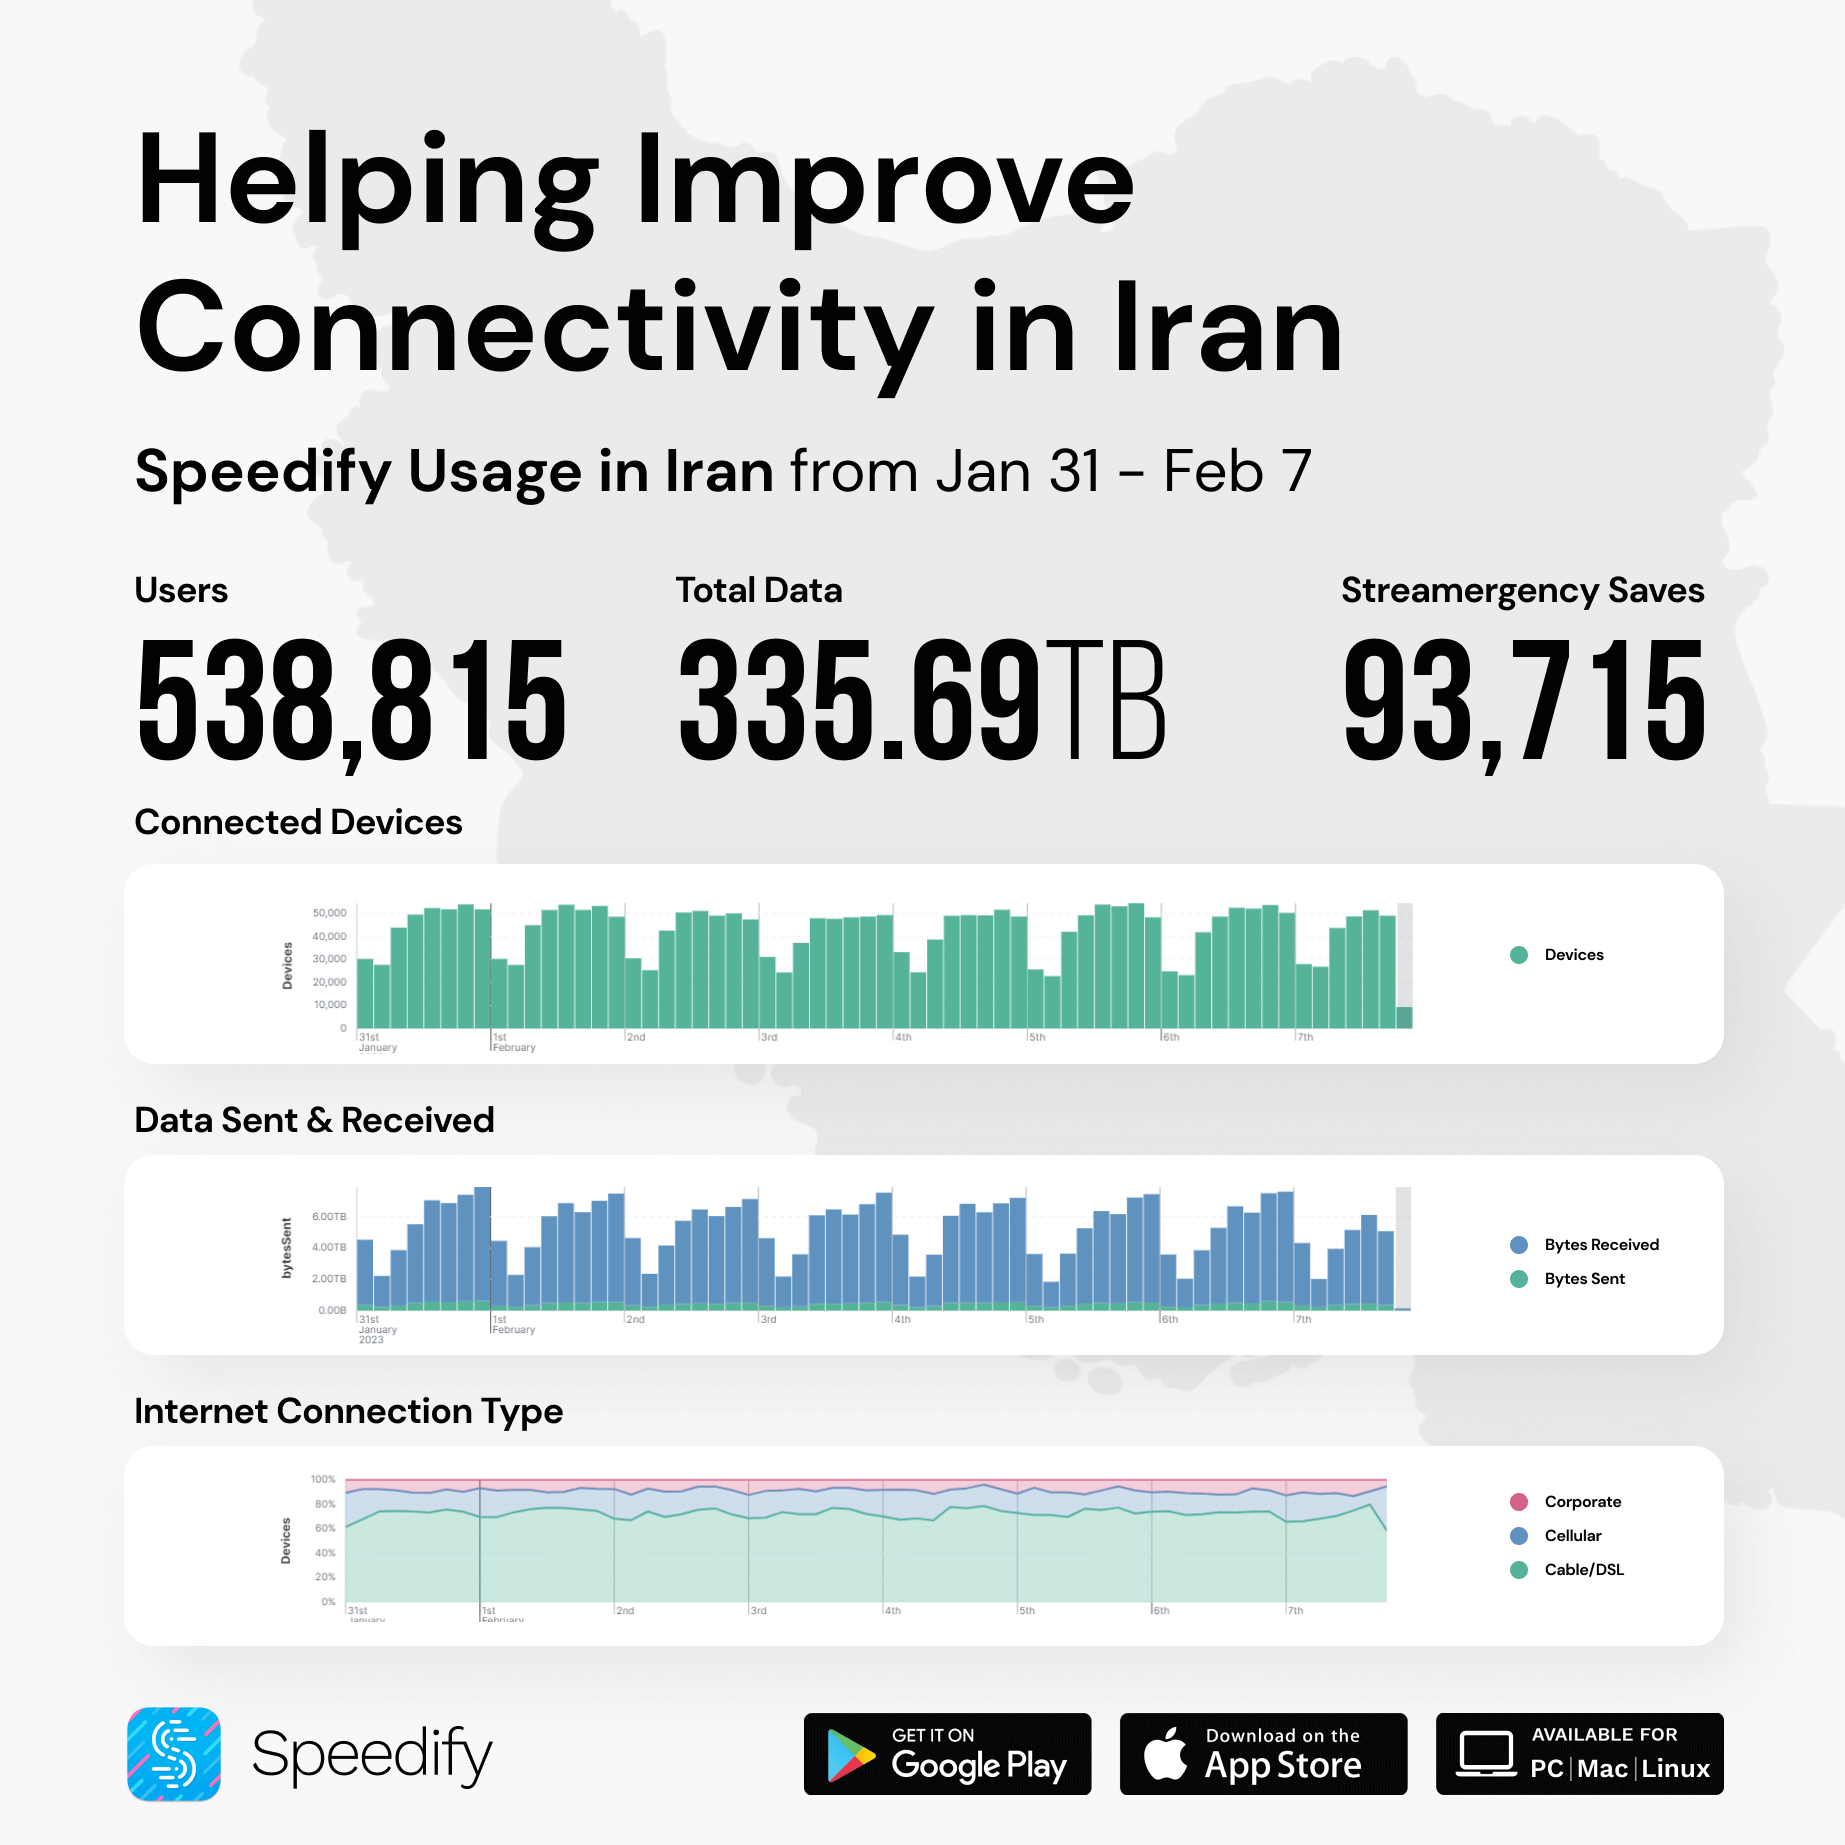 Feb 14 - Iran Internet usage for Speedify users